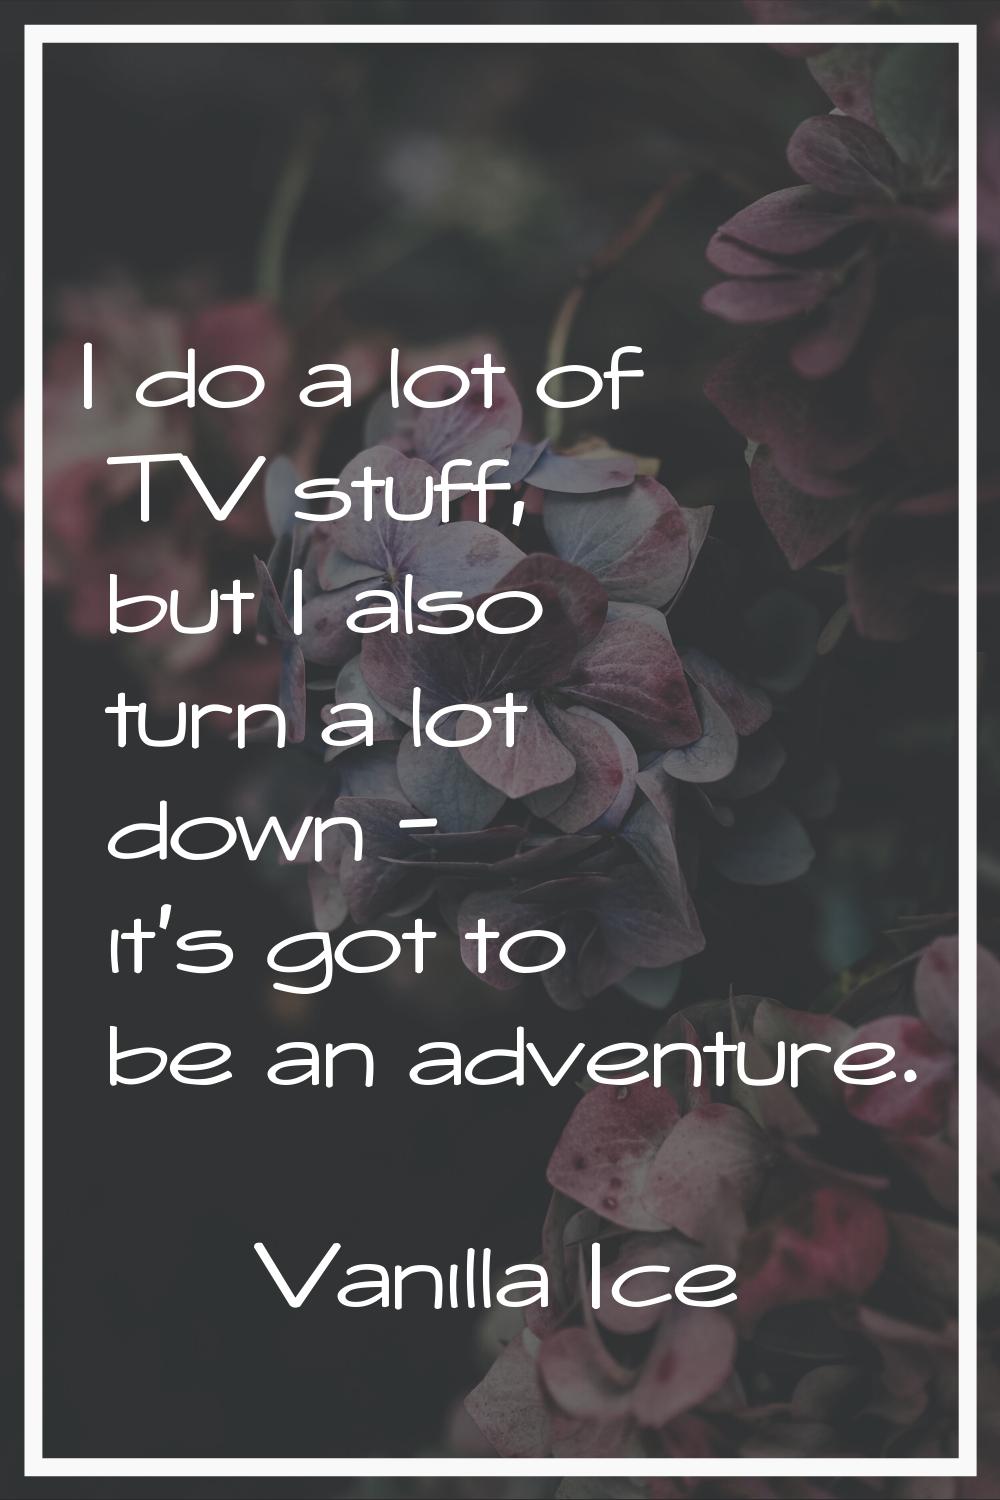 I do a lot of TV stuff, but I also turn a lot down - it's got to be an adventure.